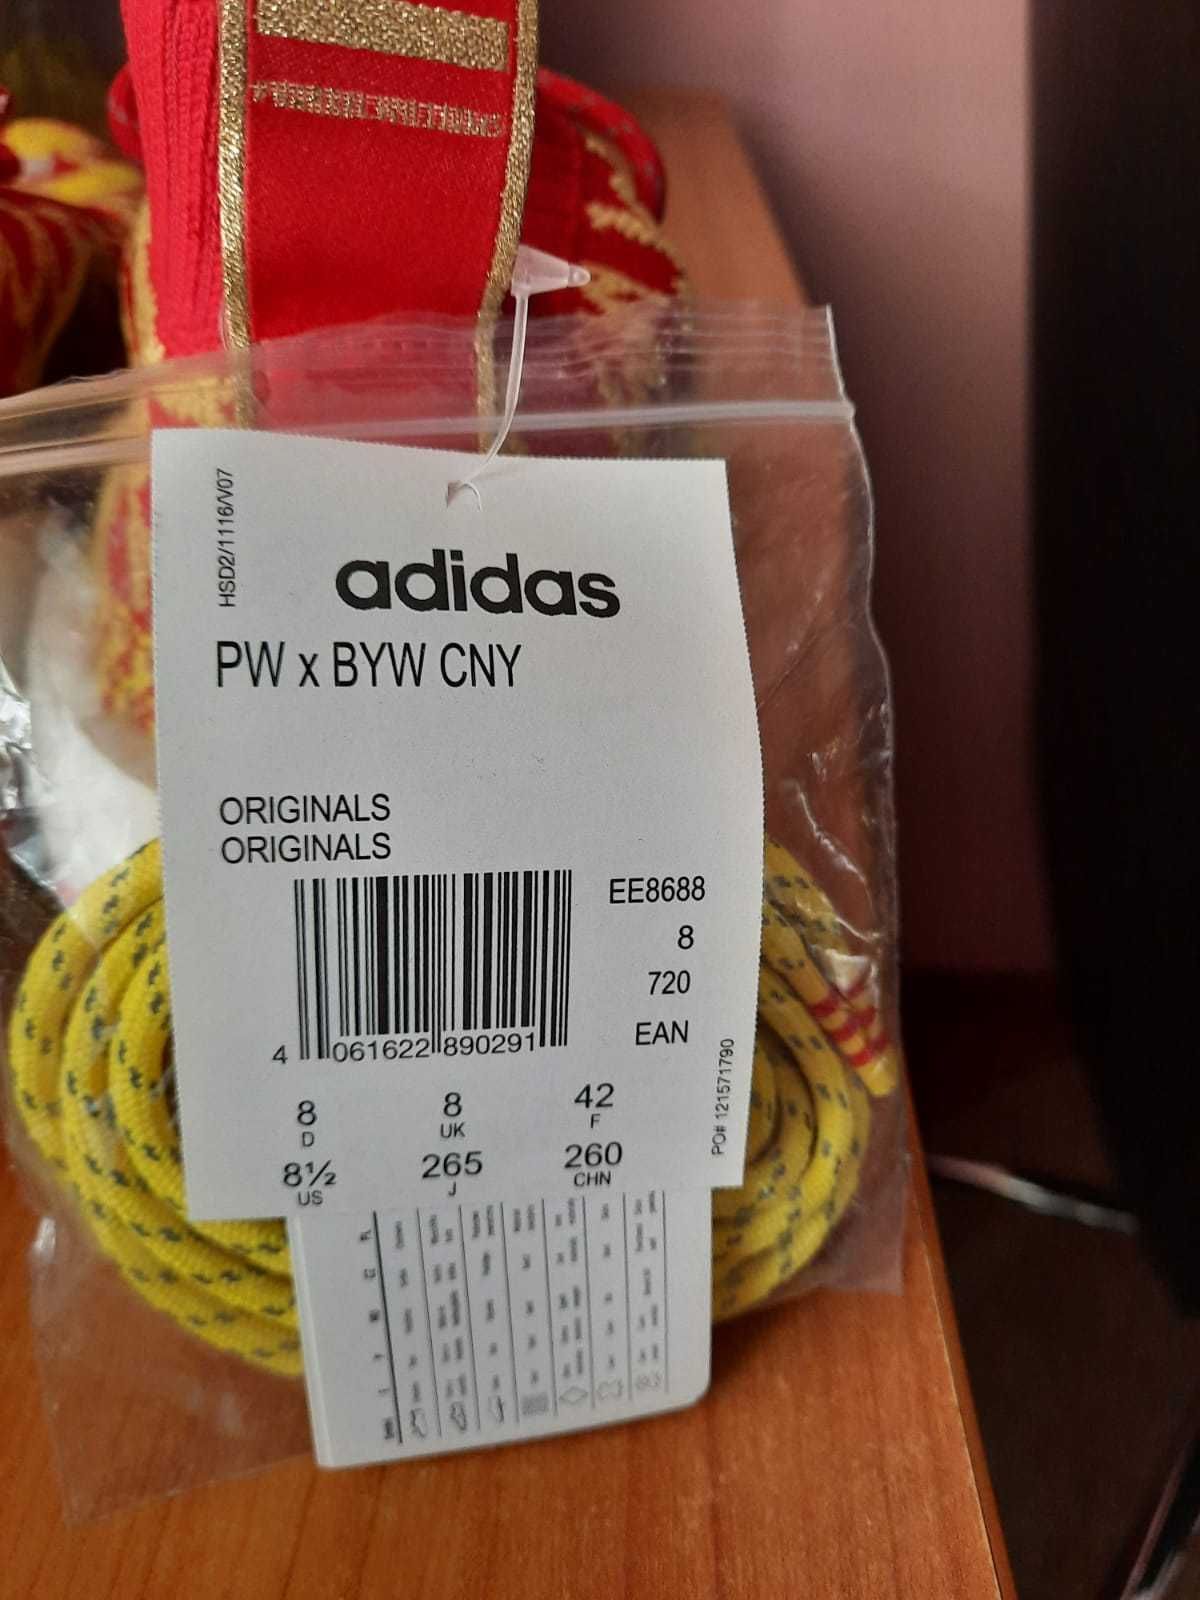 Adidas X Pharell Williams - LIMITED EDITON